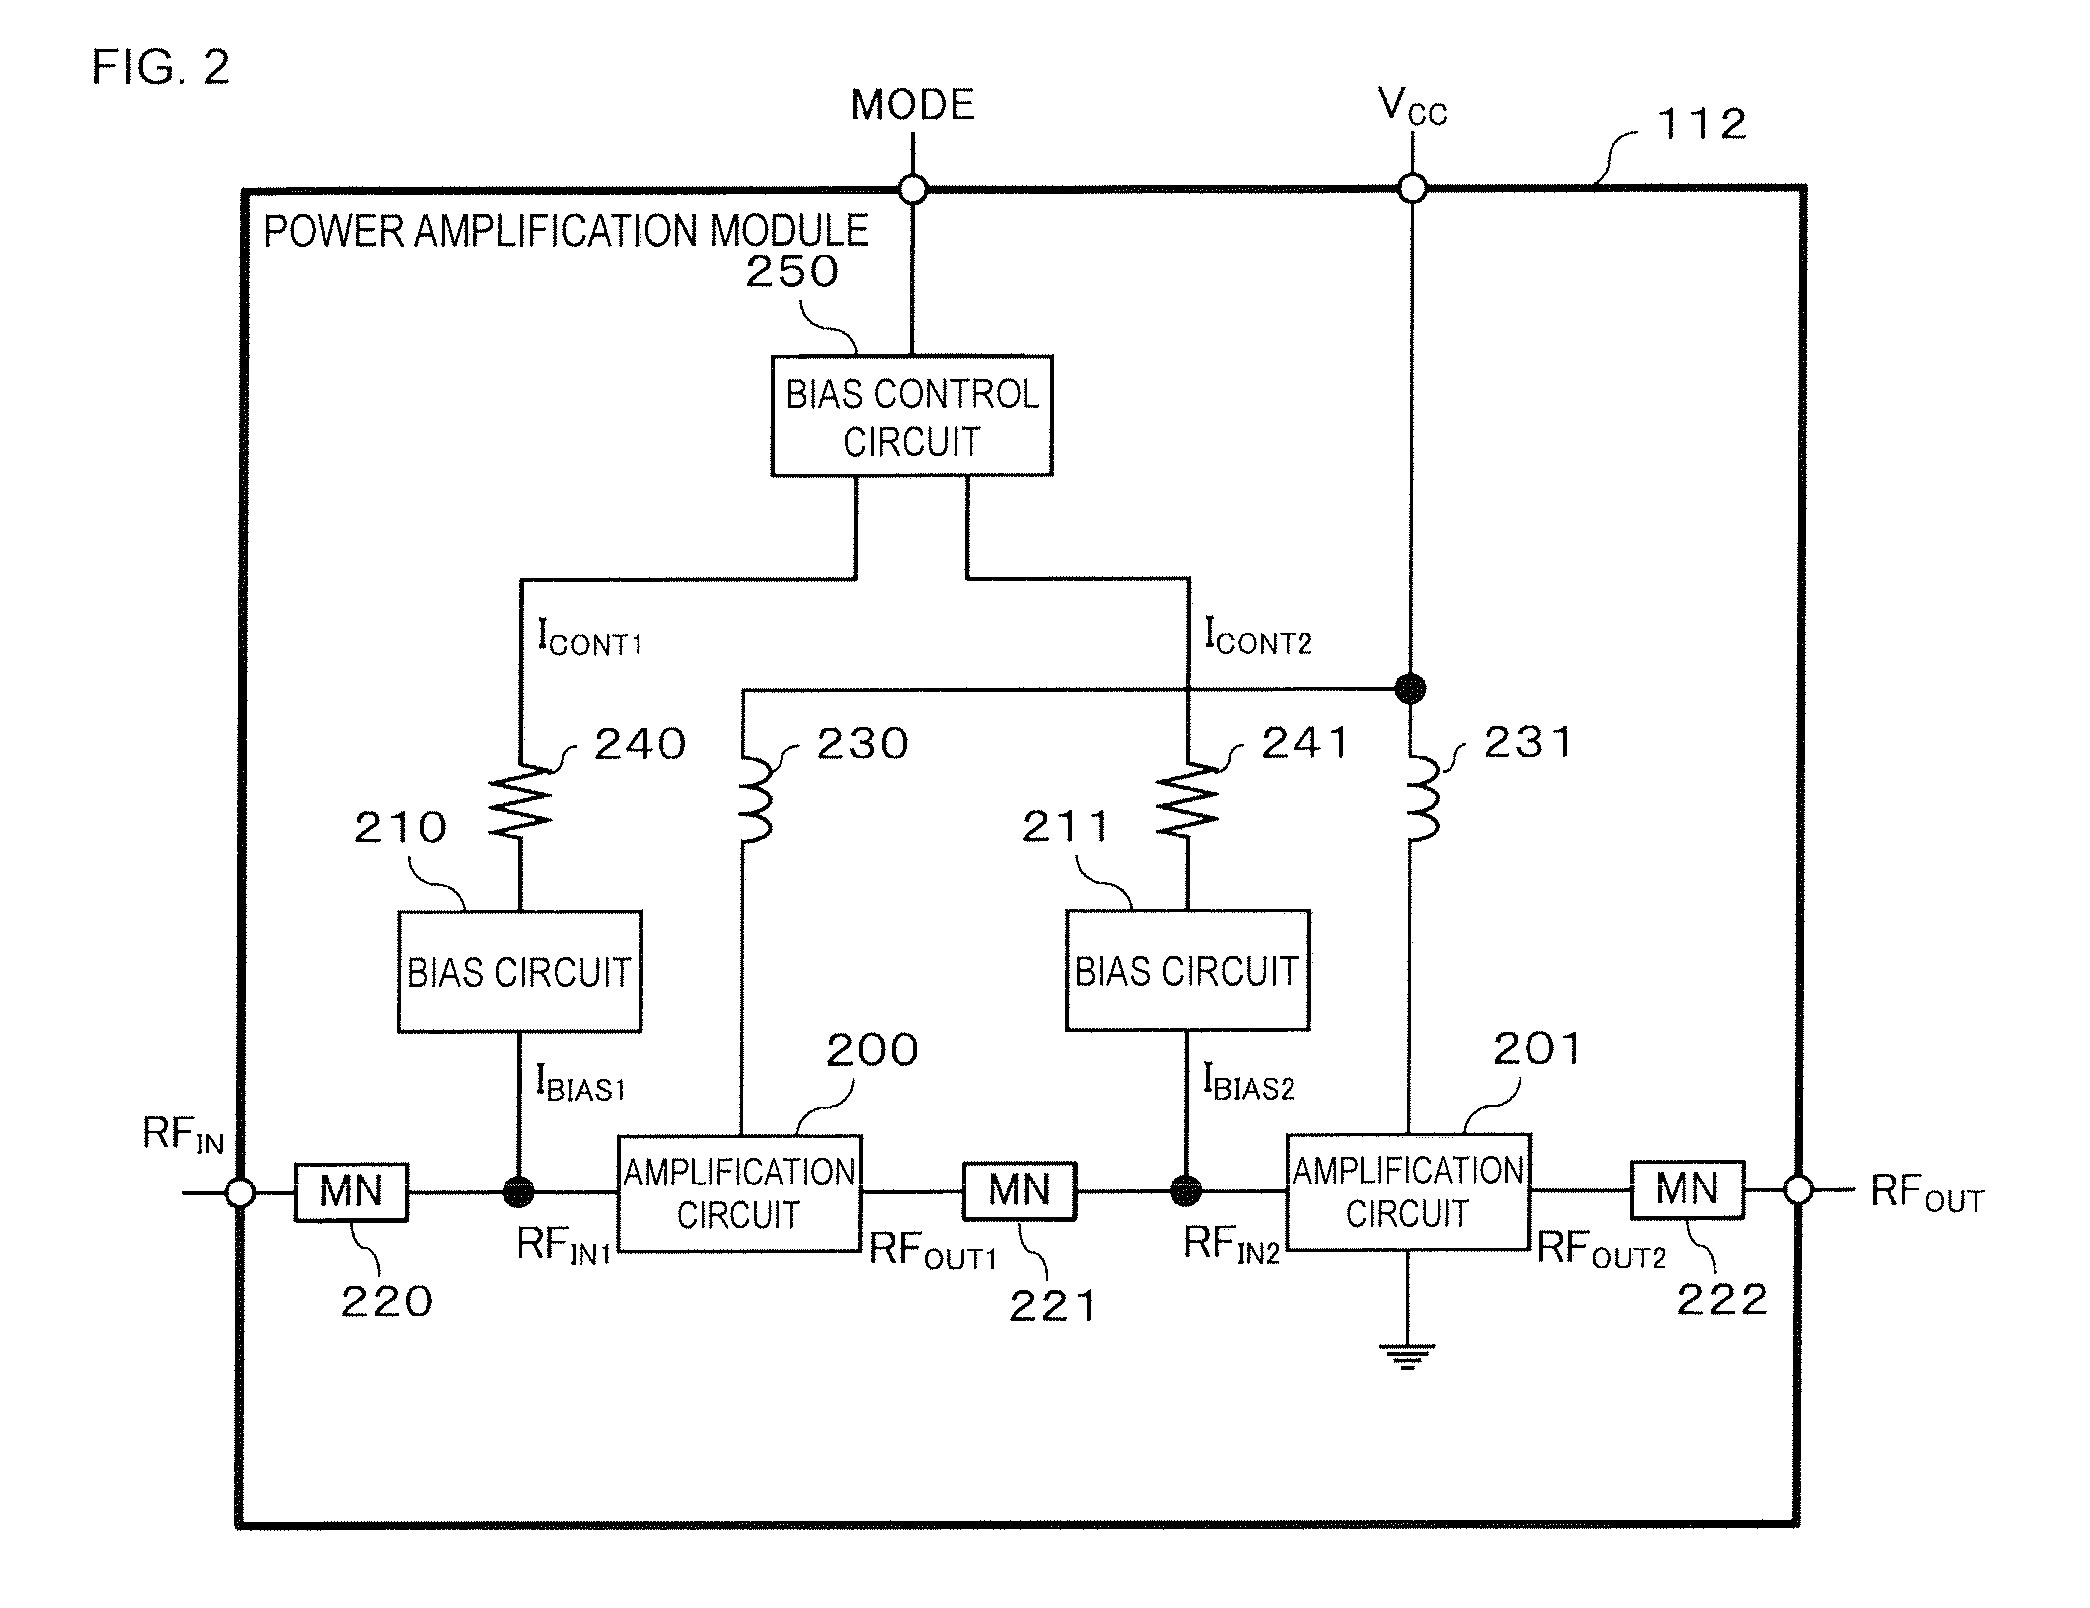 Power amplification module